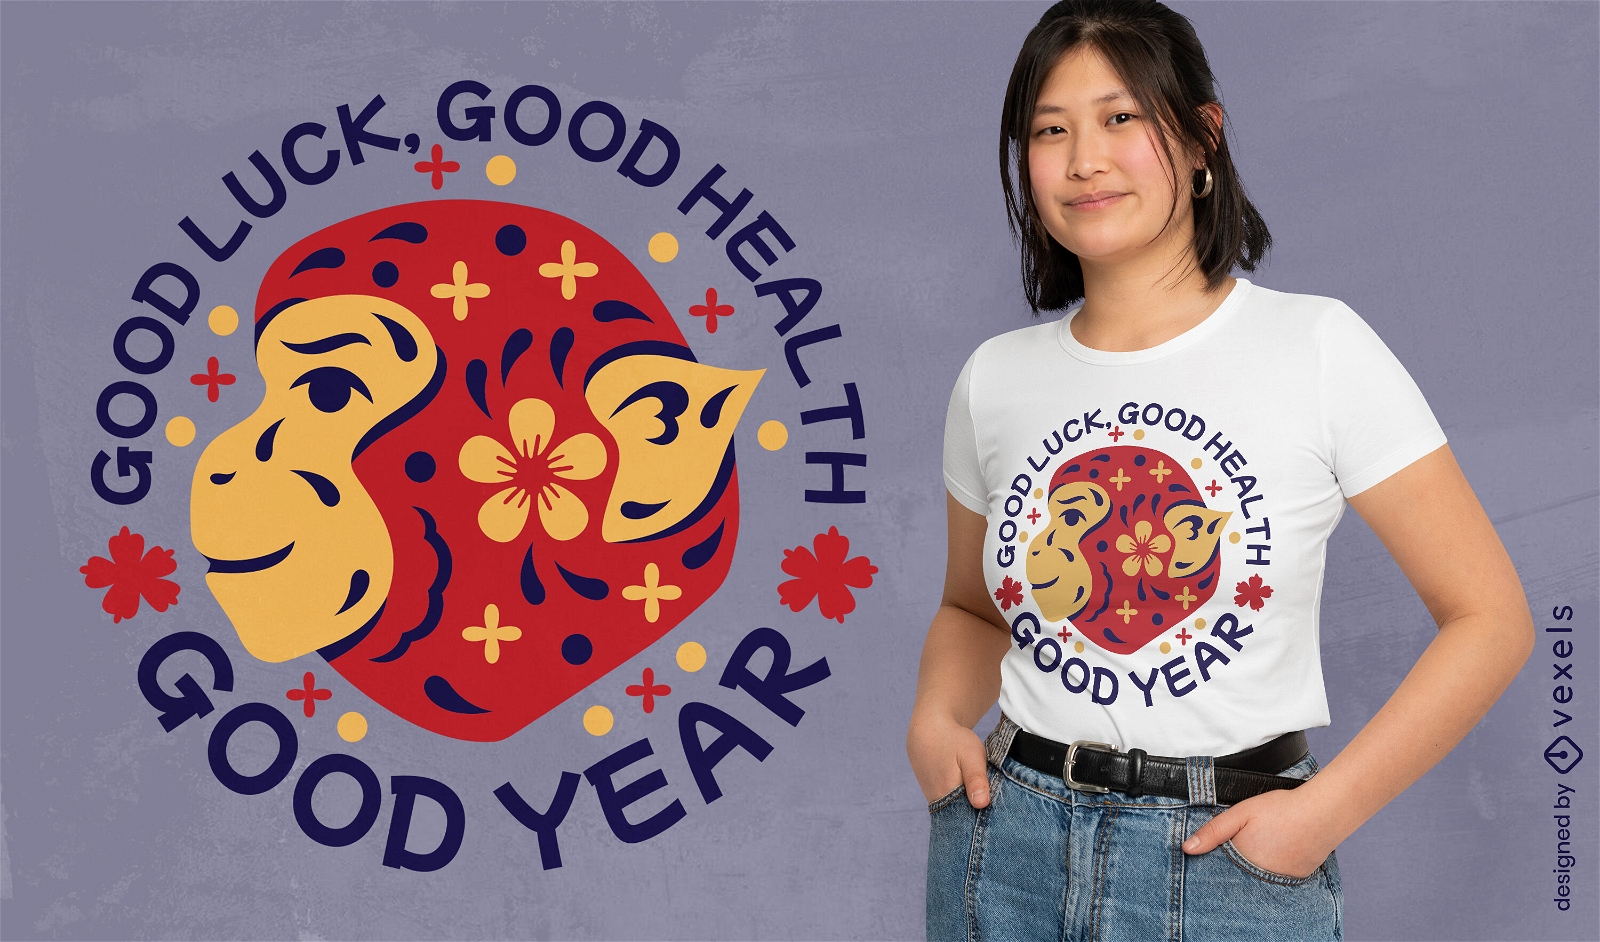 Prosperous year wish t-shirt design